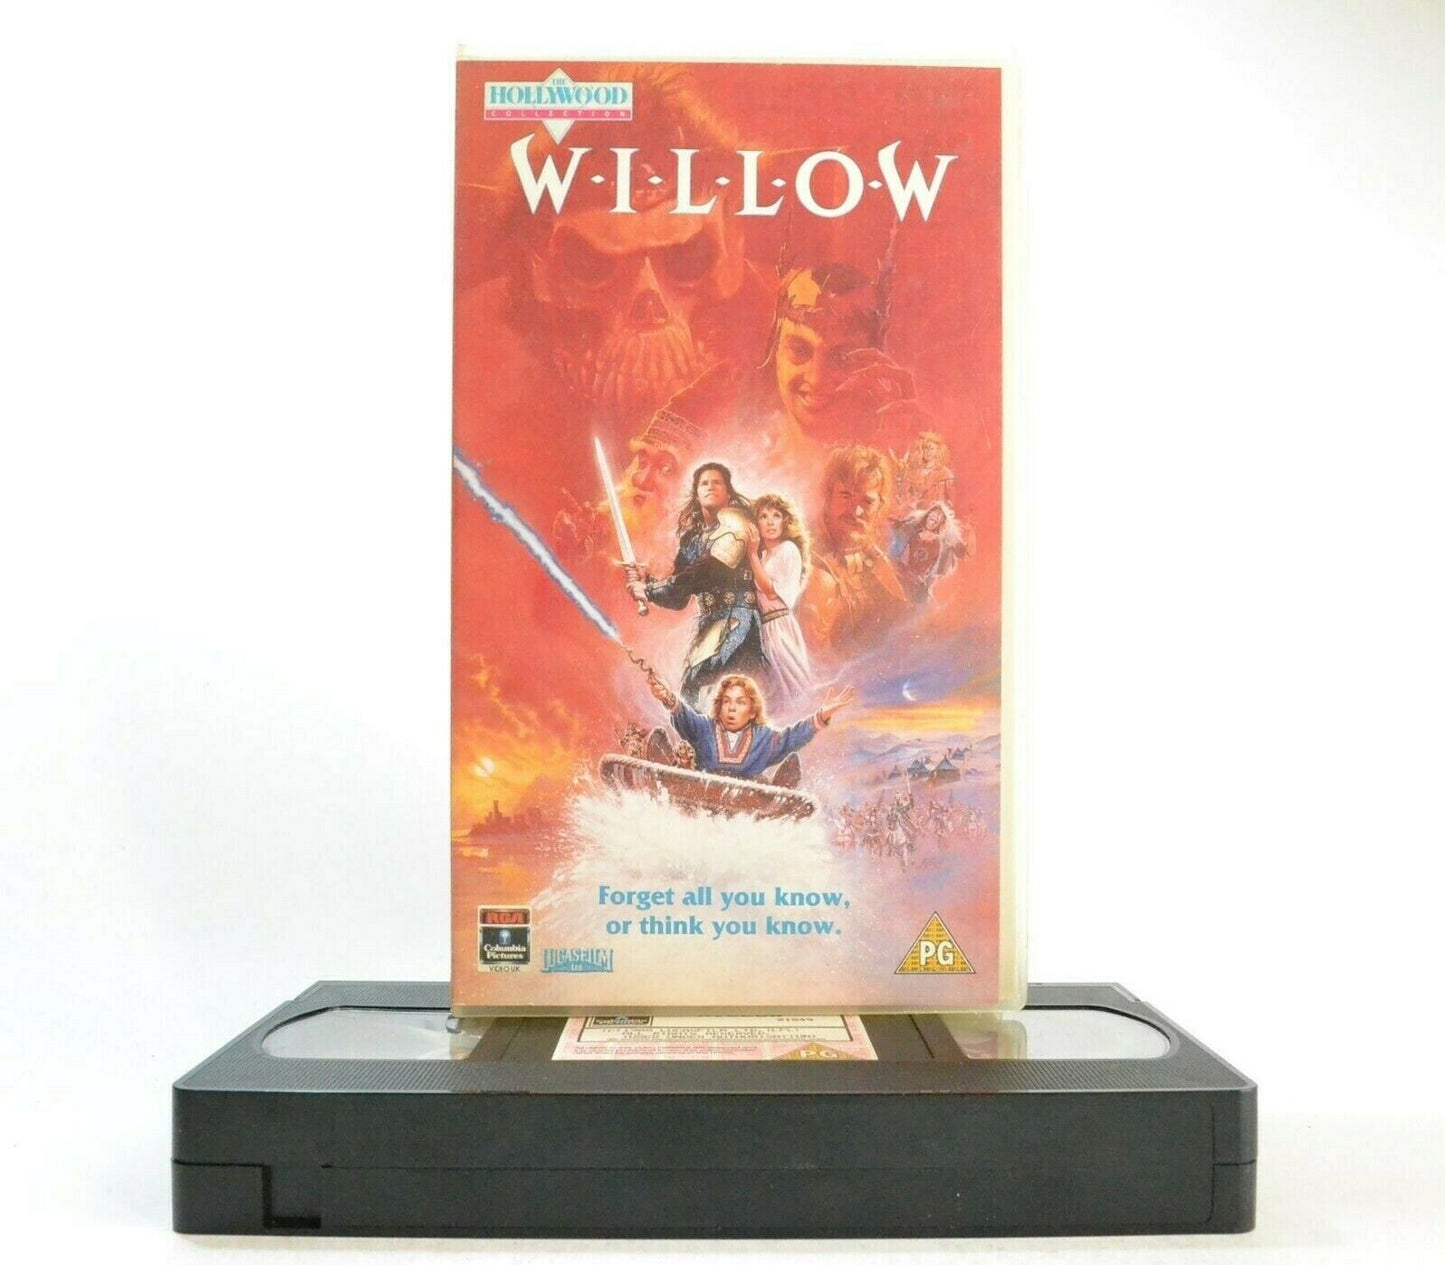 Willow: Story By G.Lucas - Fantasy (1988) - Val Kilmer - Children's - Pal VHS-